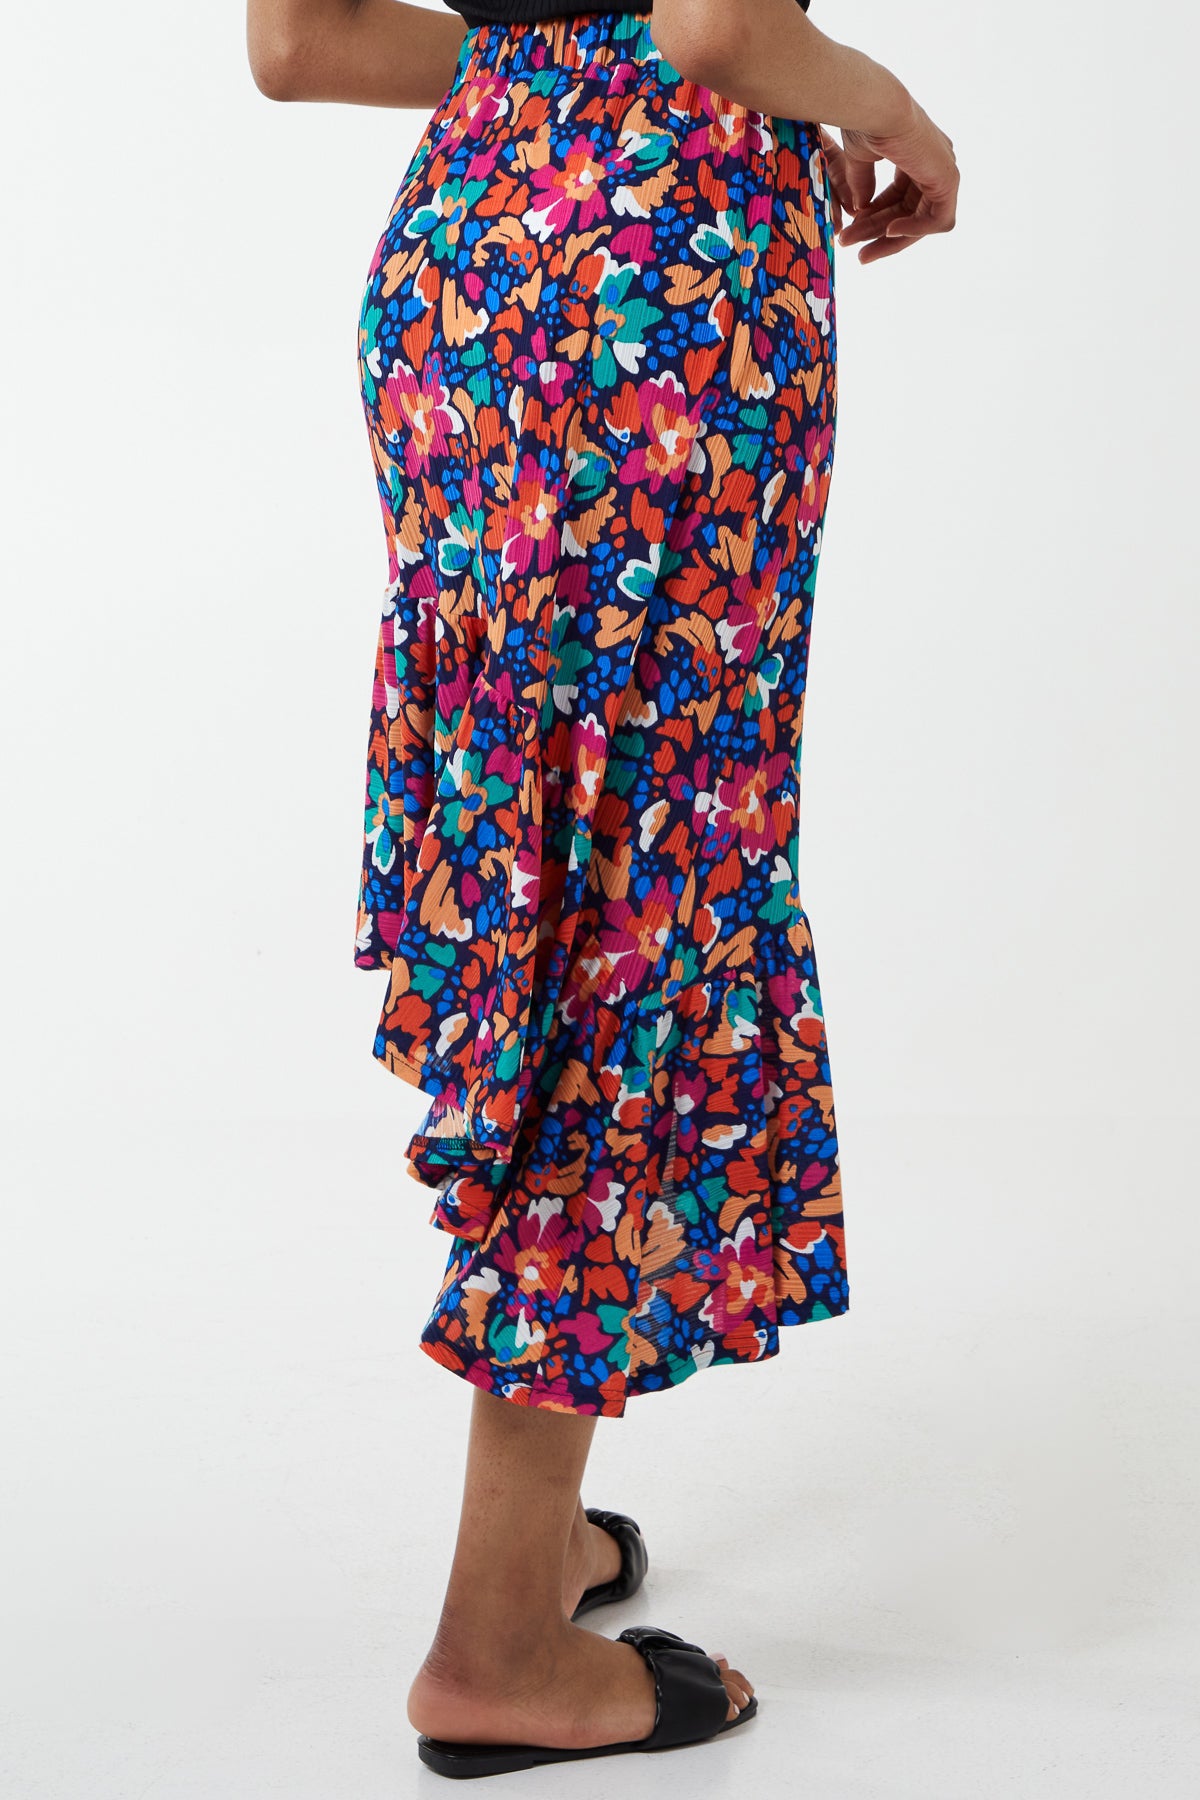 Asymmetric Floral Midi Skirt